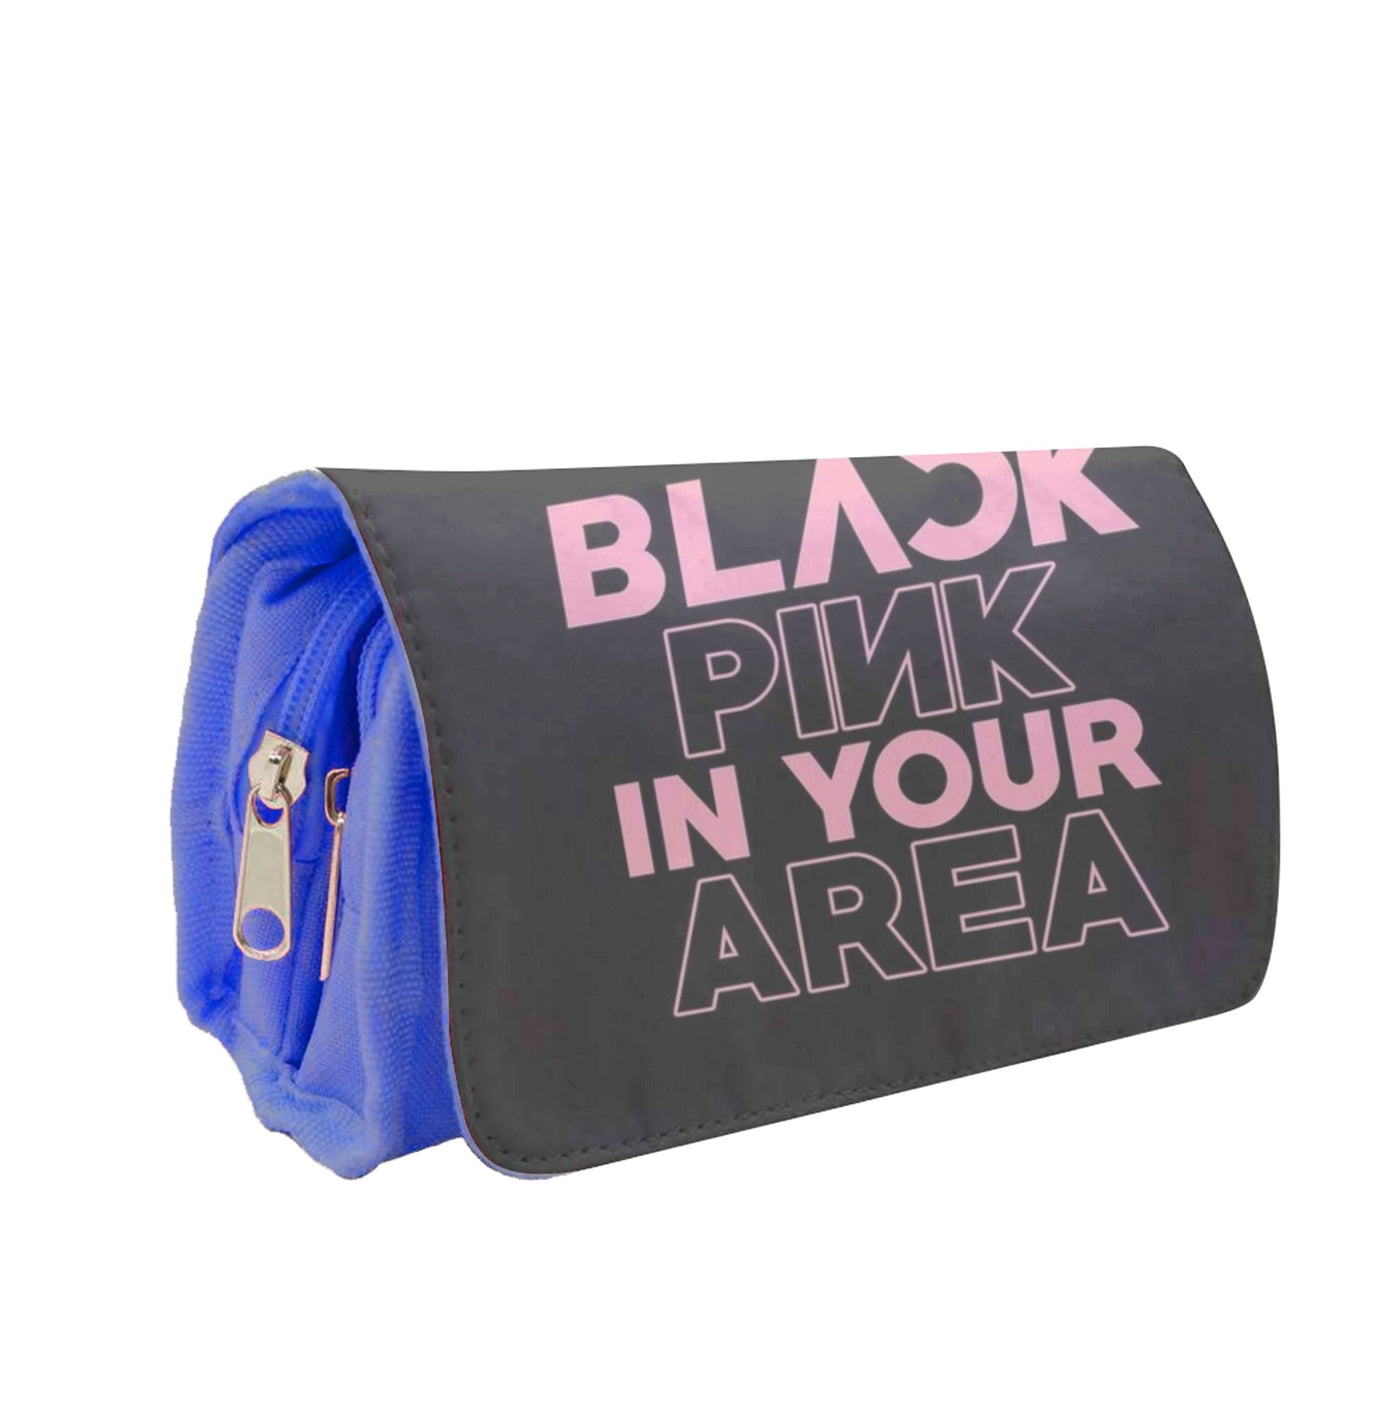 Blackpink In Your Area - Black Pencil Case